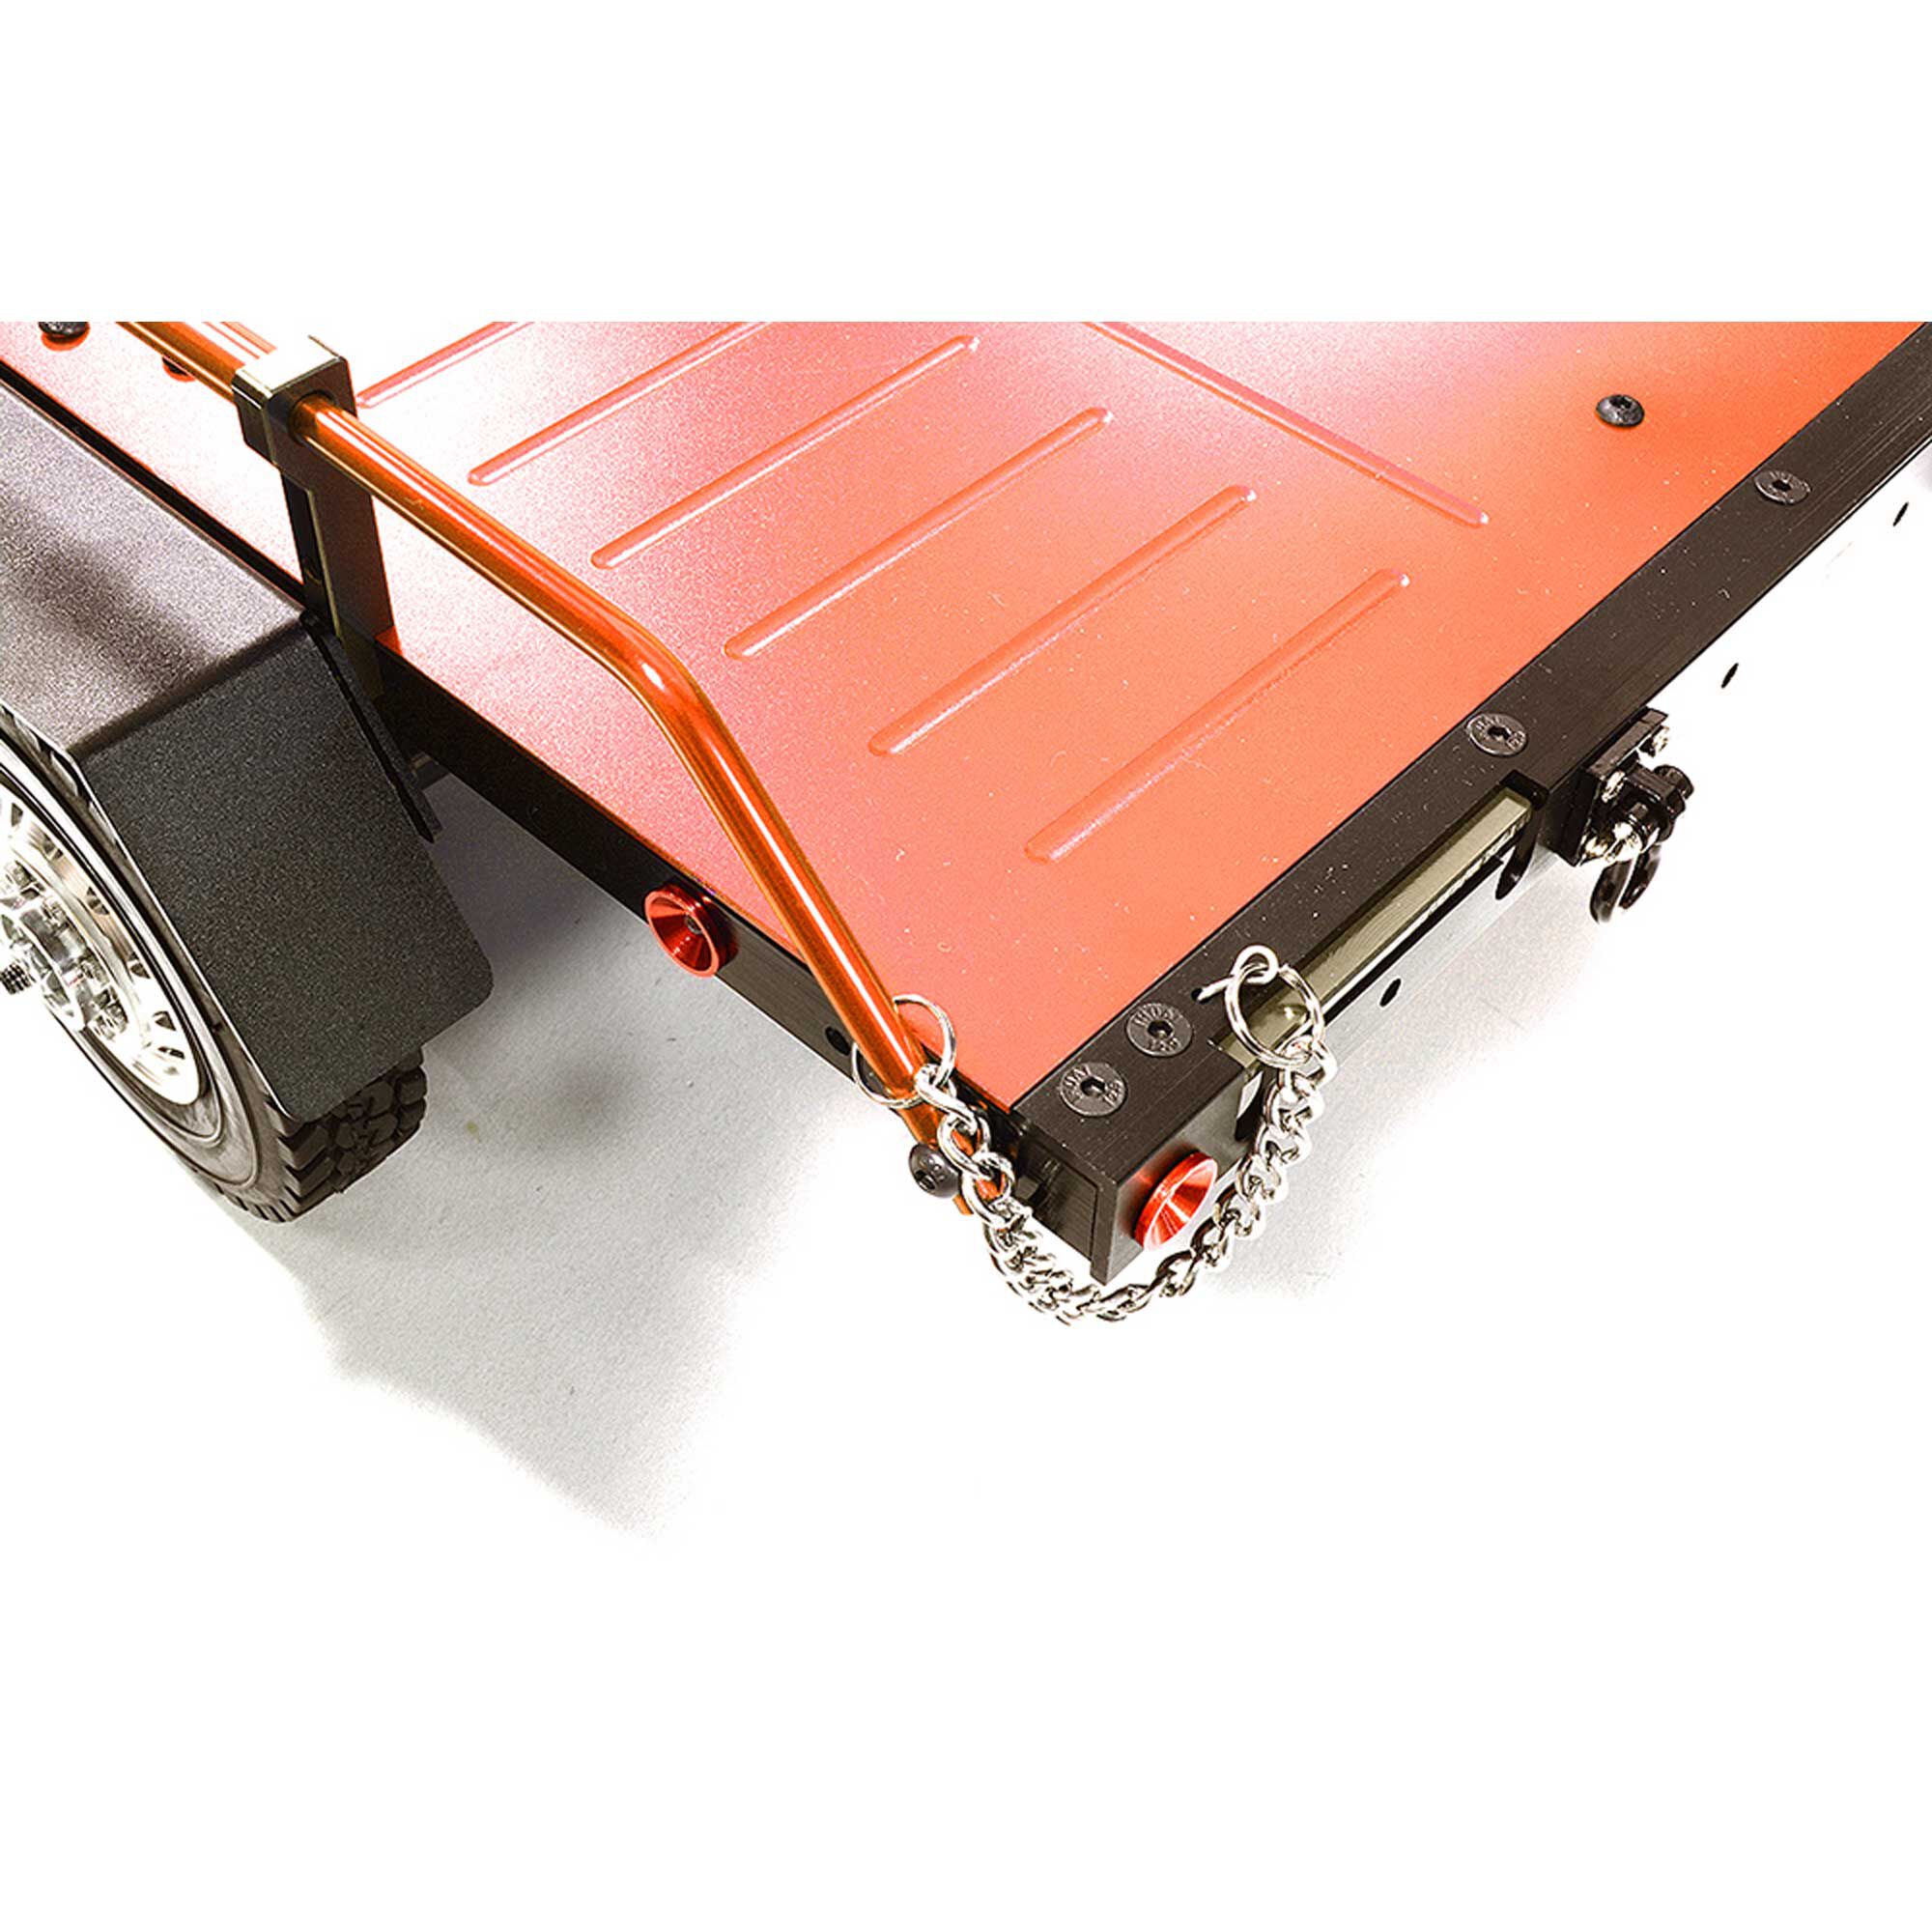 Integy Alloy Flatbed Dual Axle Car Trailer, Orange: 1/10 RC